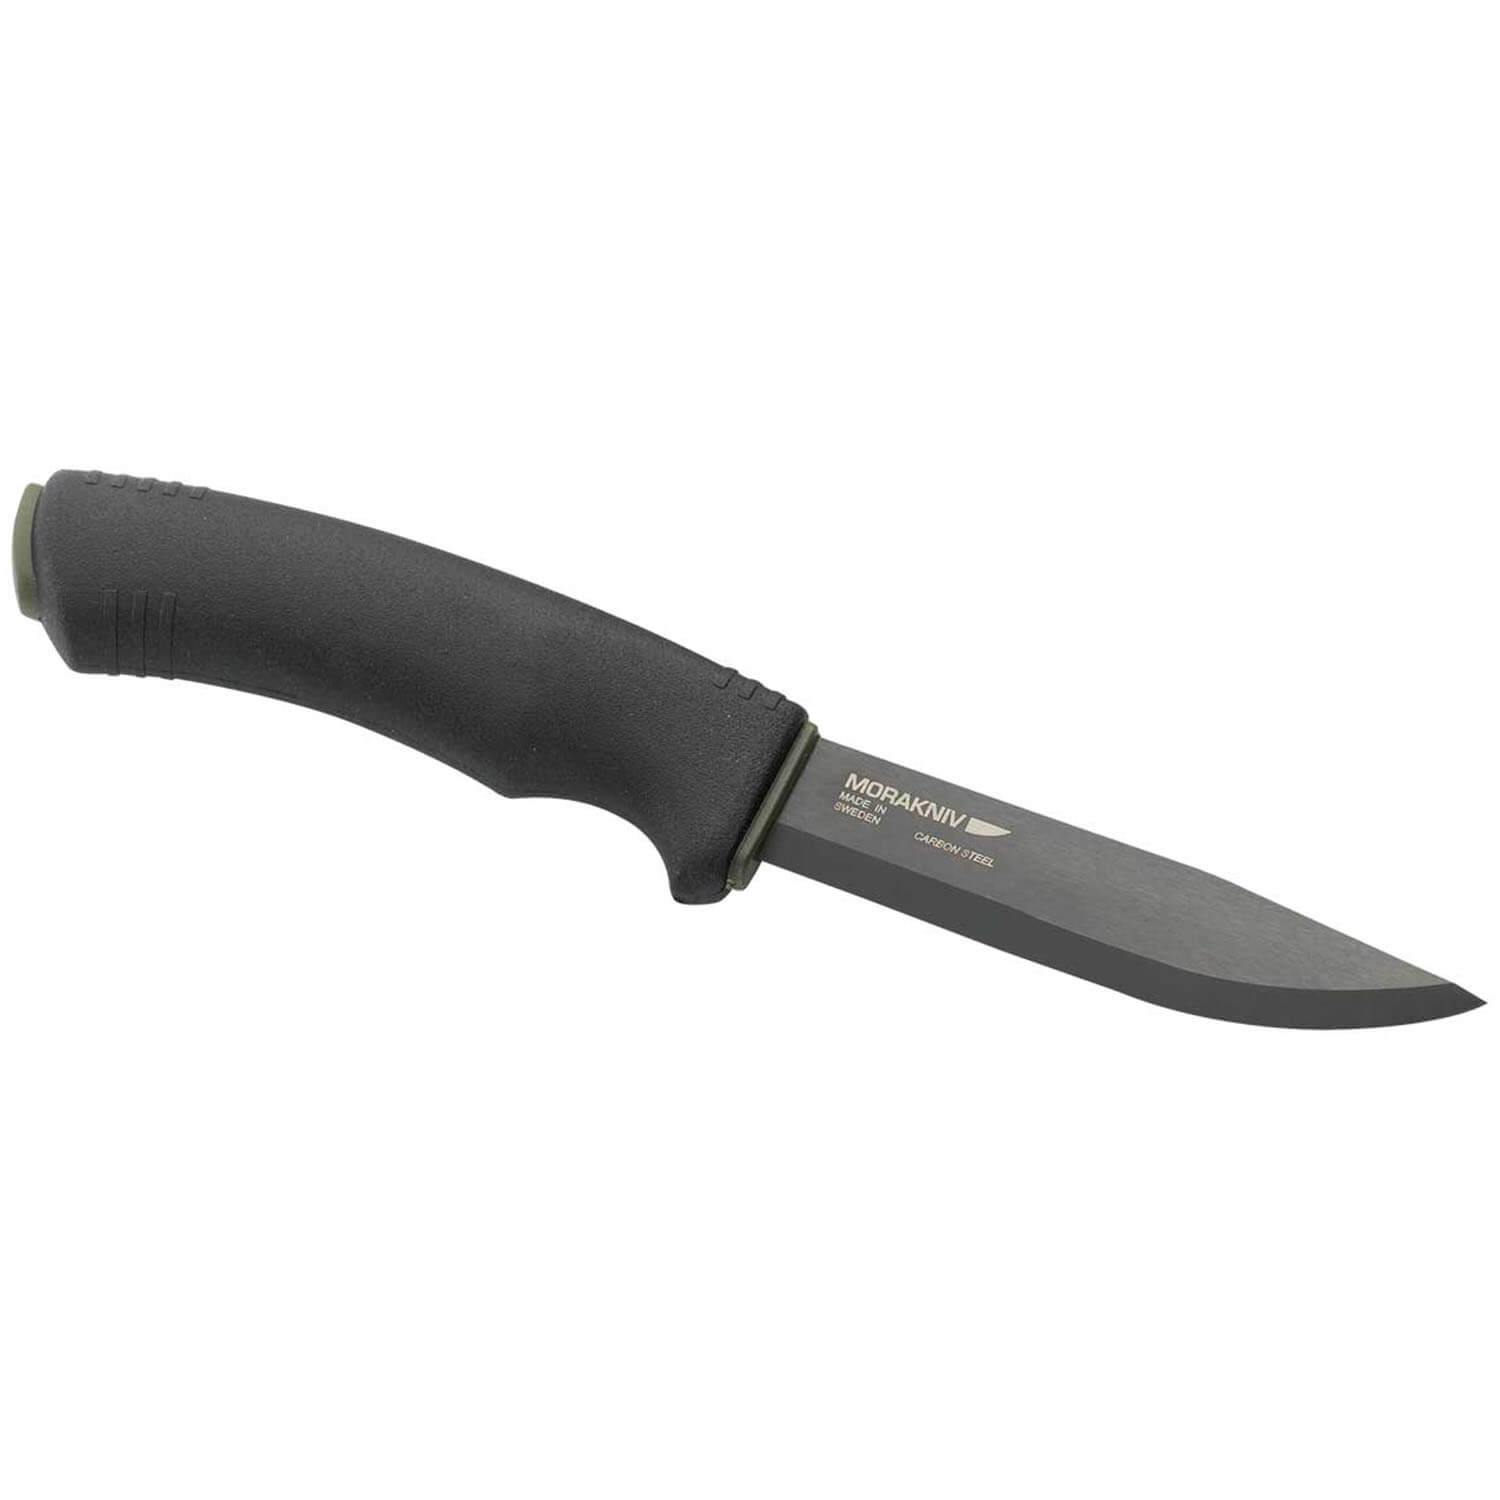 Mora Knife - survival (black)